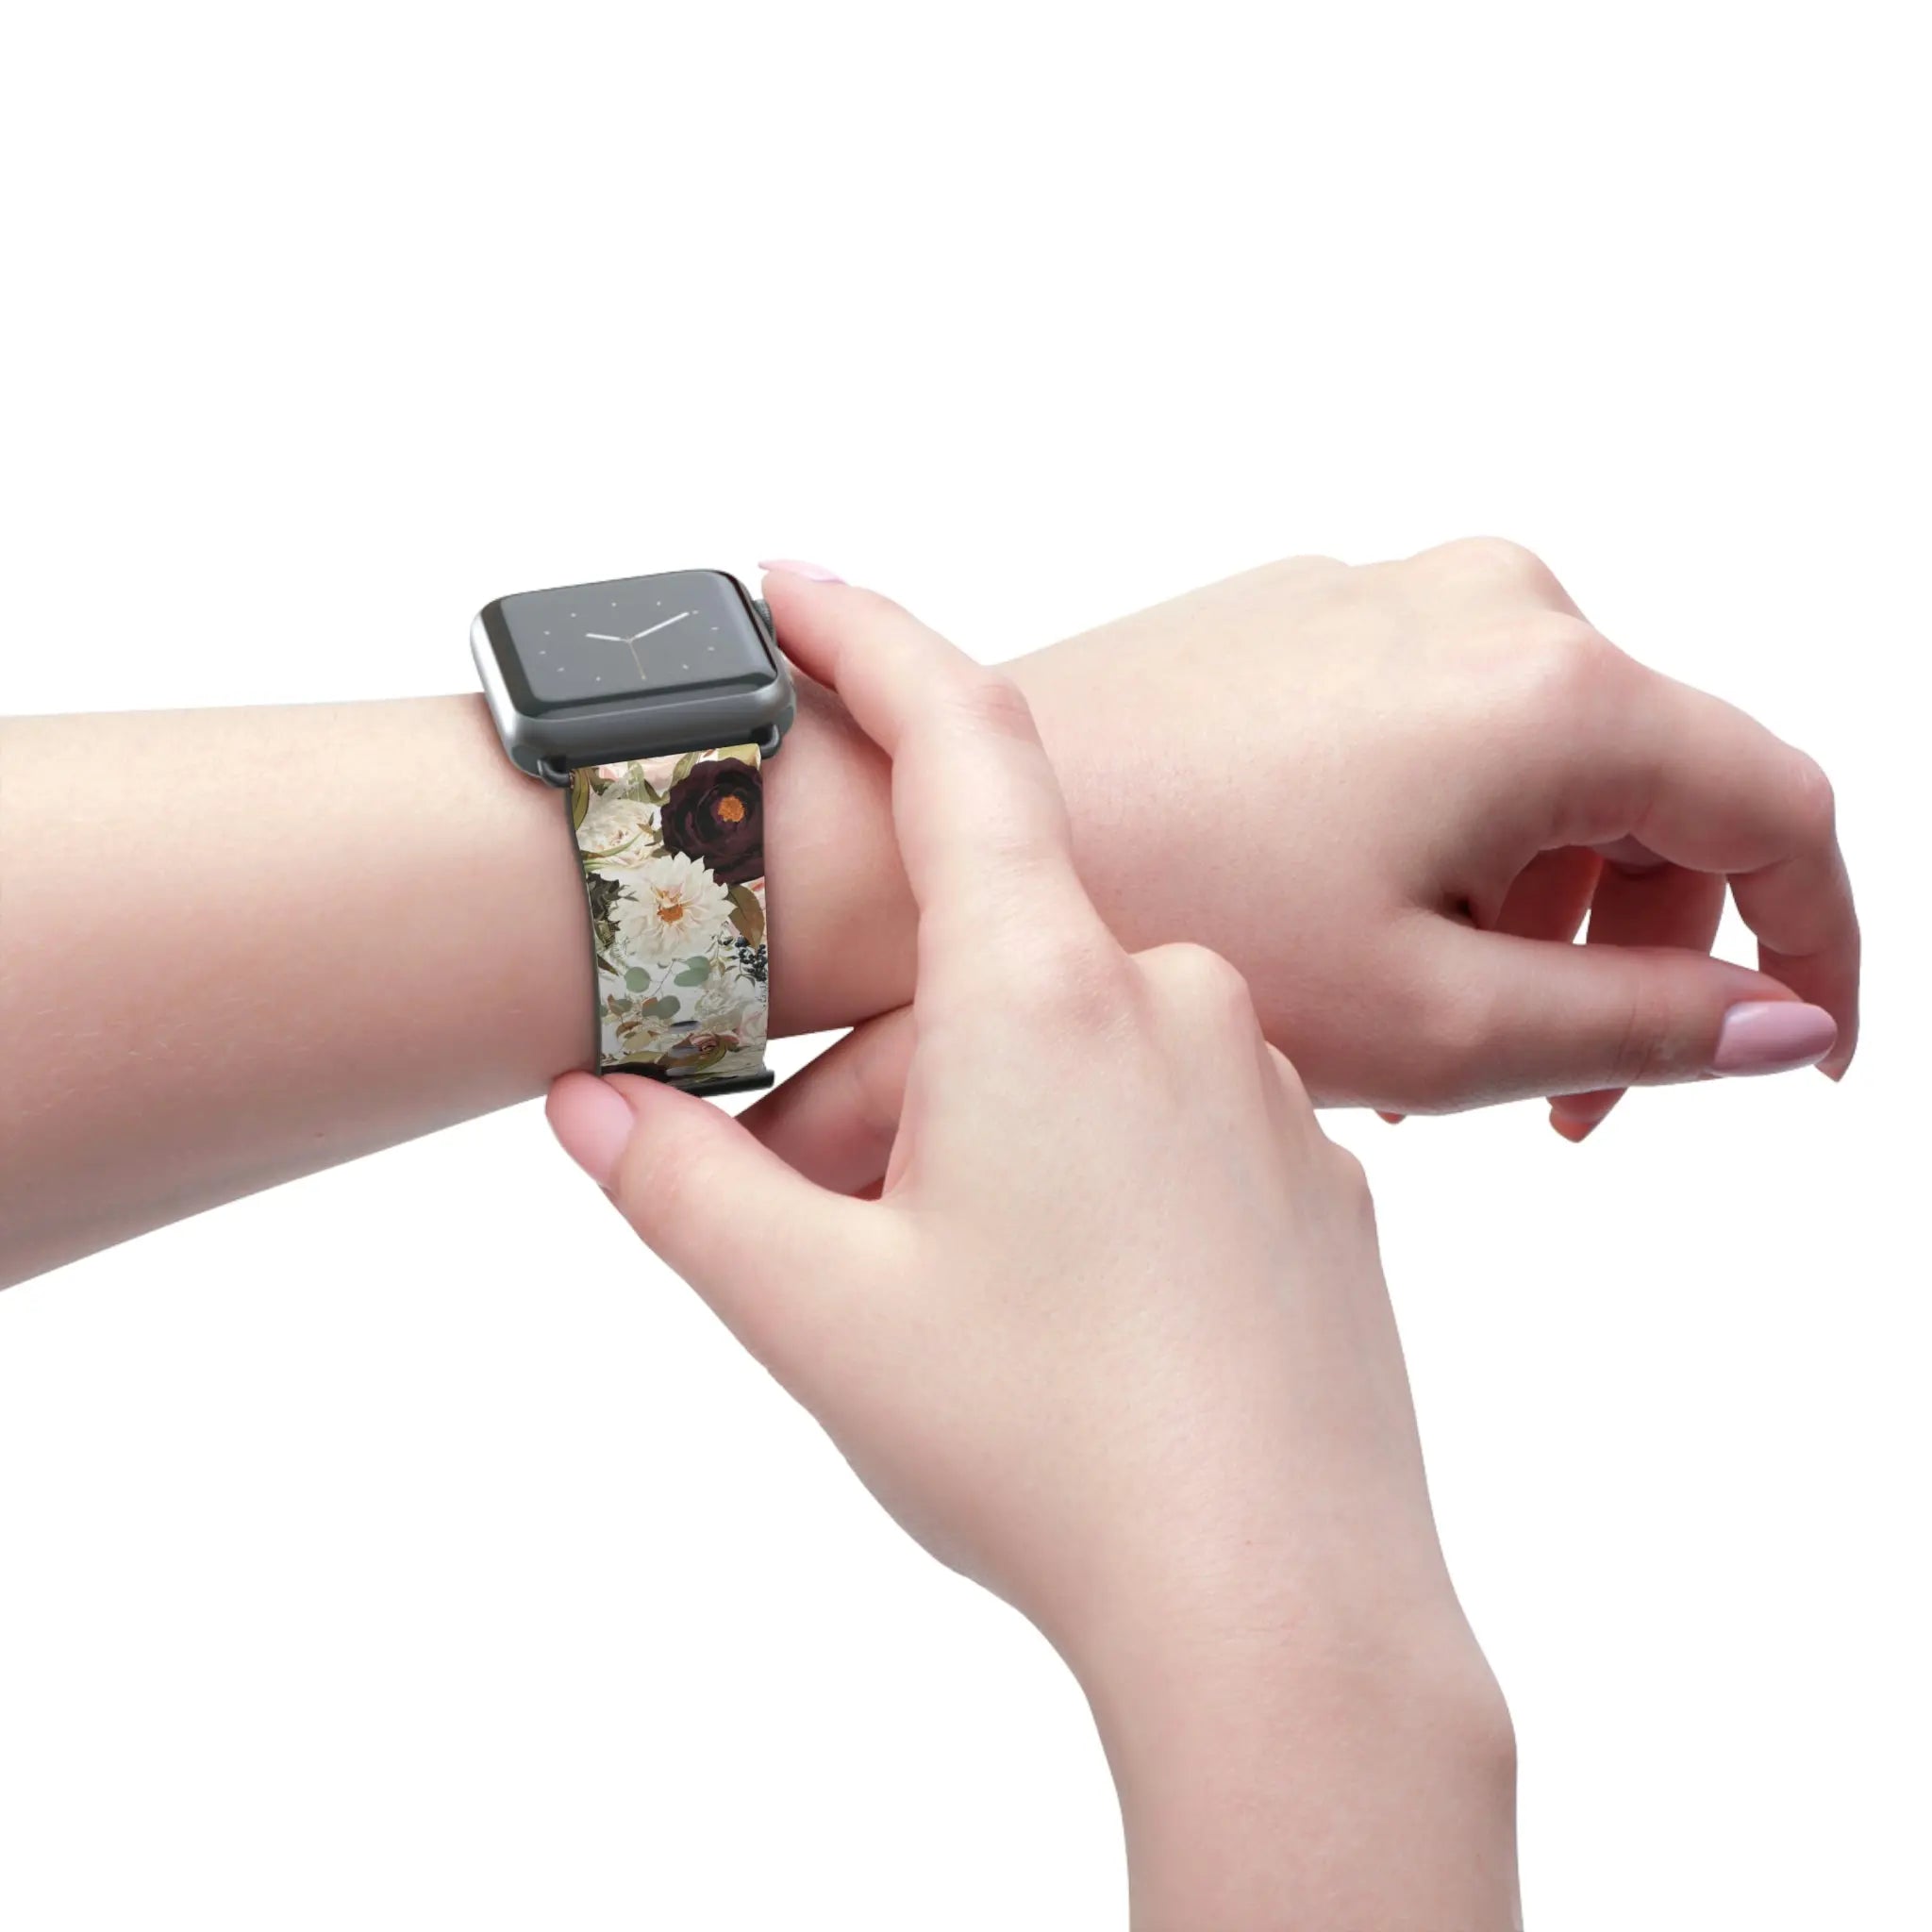  BOHO Stay Wild (Dark Bloom) White Watch Band for Apple Watch Watch Bands